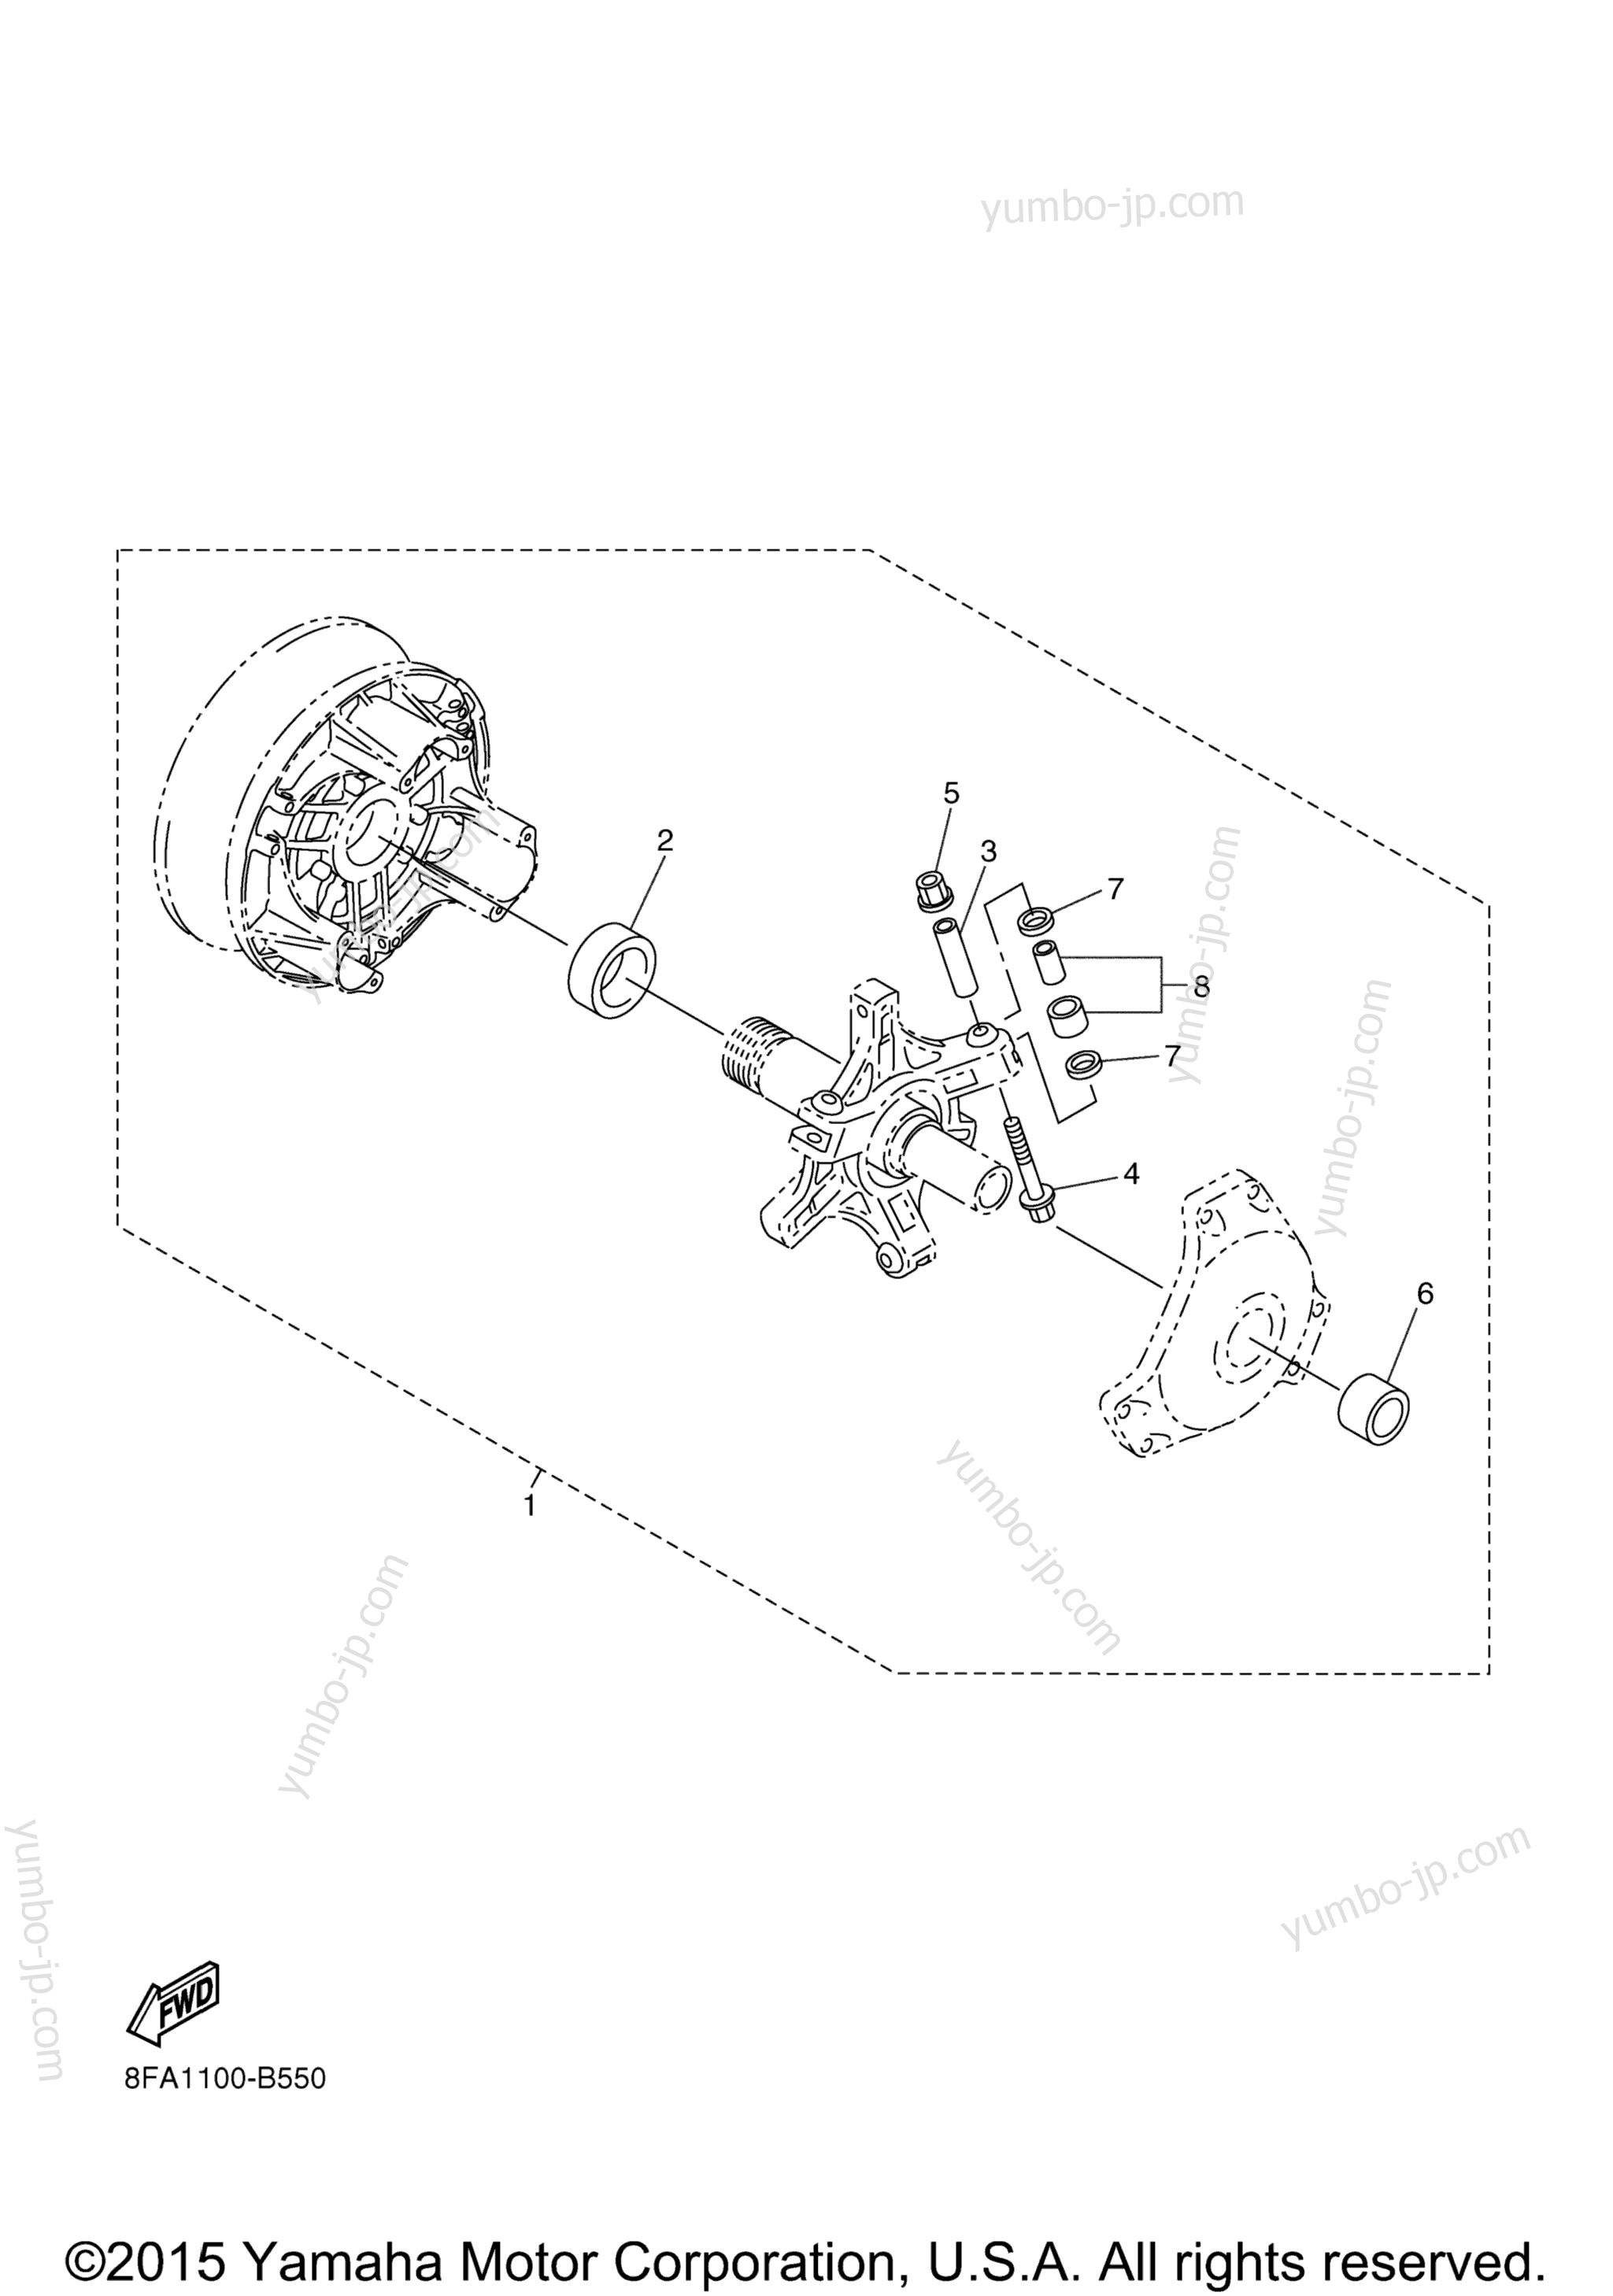 Alternate Clutch Tune Up Kit for snowmobiles YAMAHA SRVIPER M TX 153 SE (SR10M53SFR) 2015 year